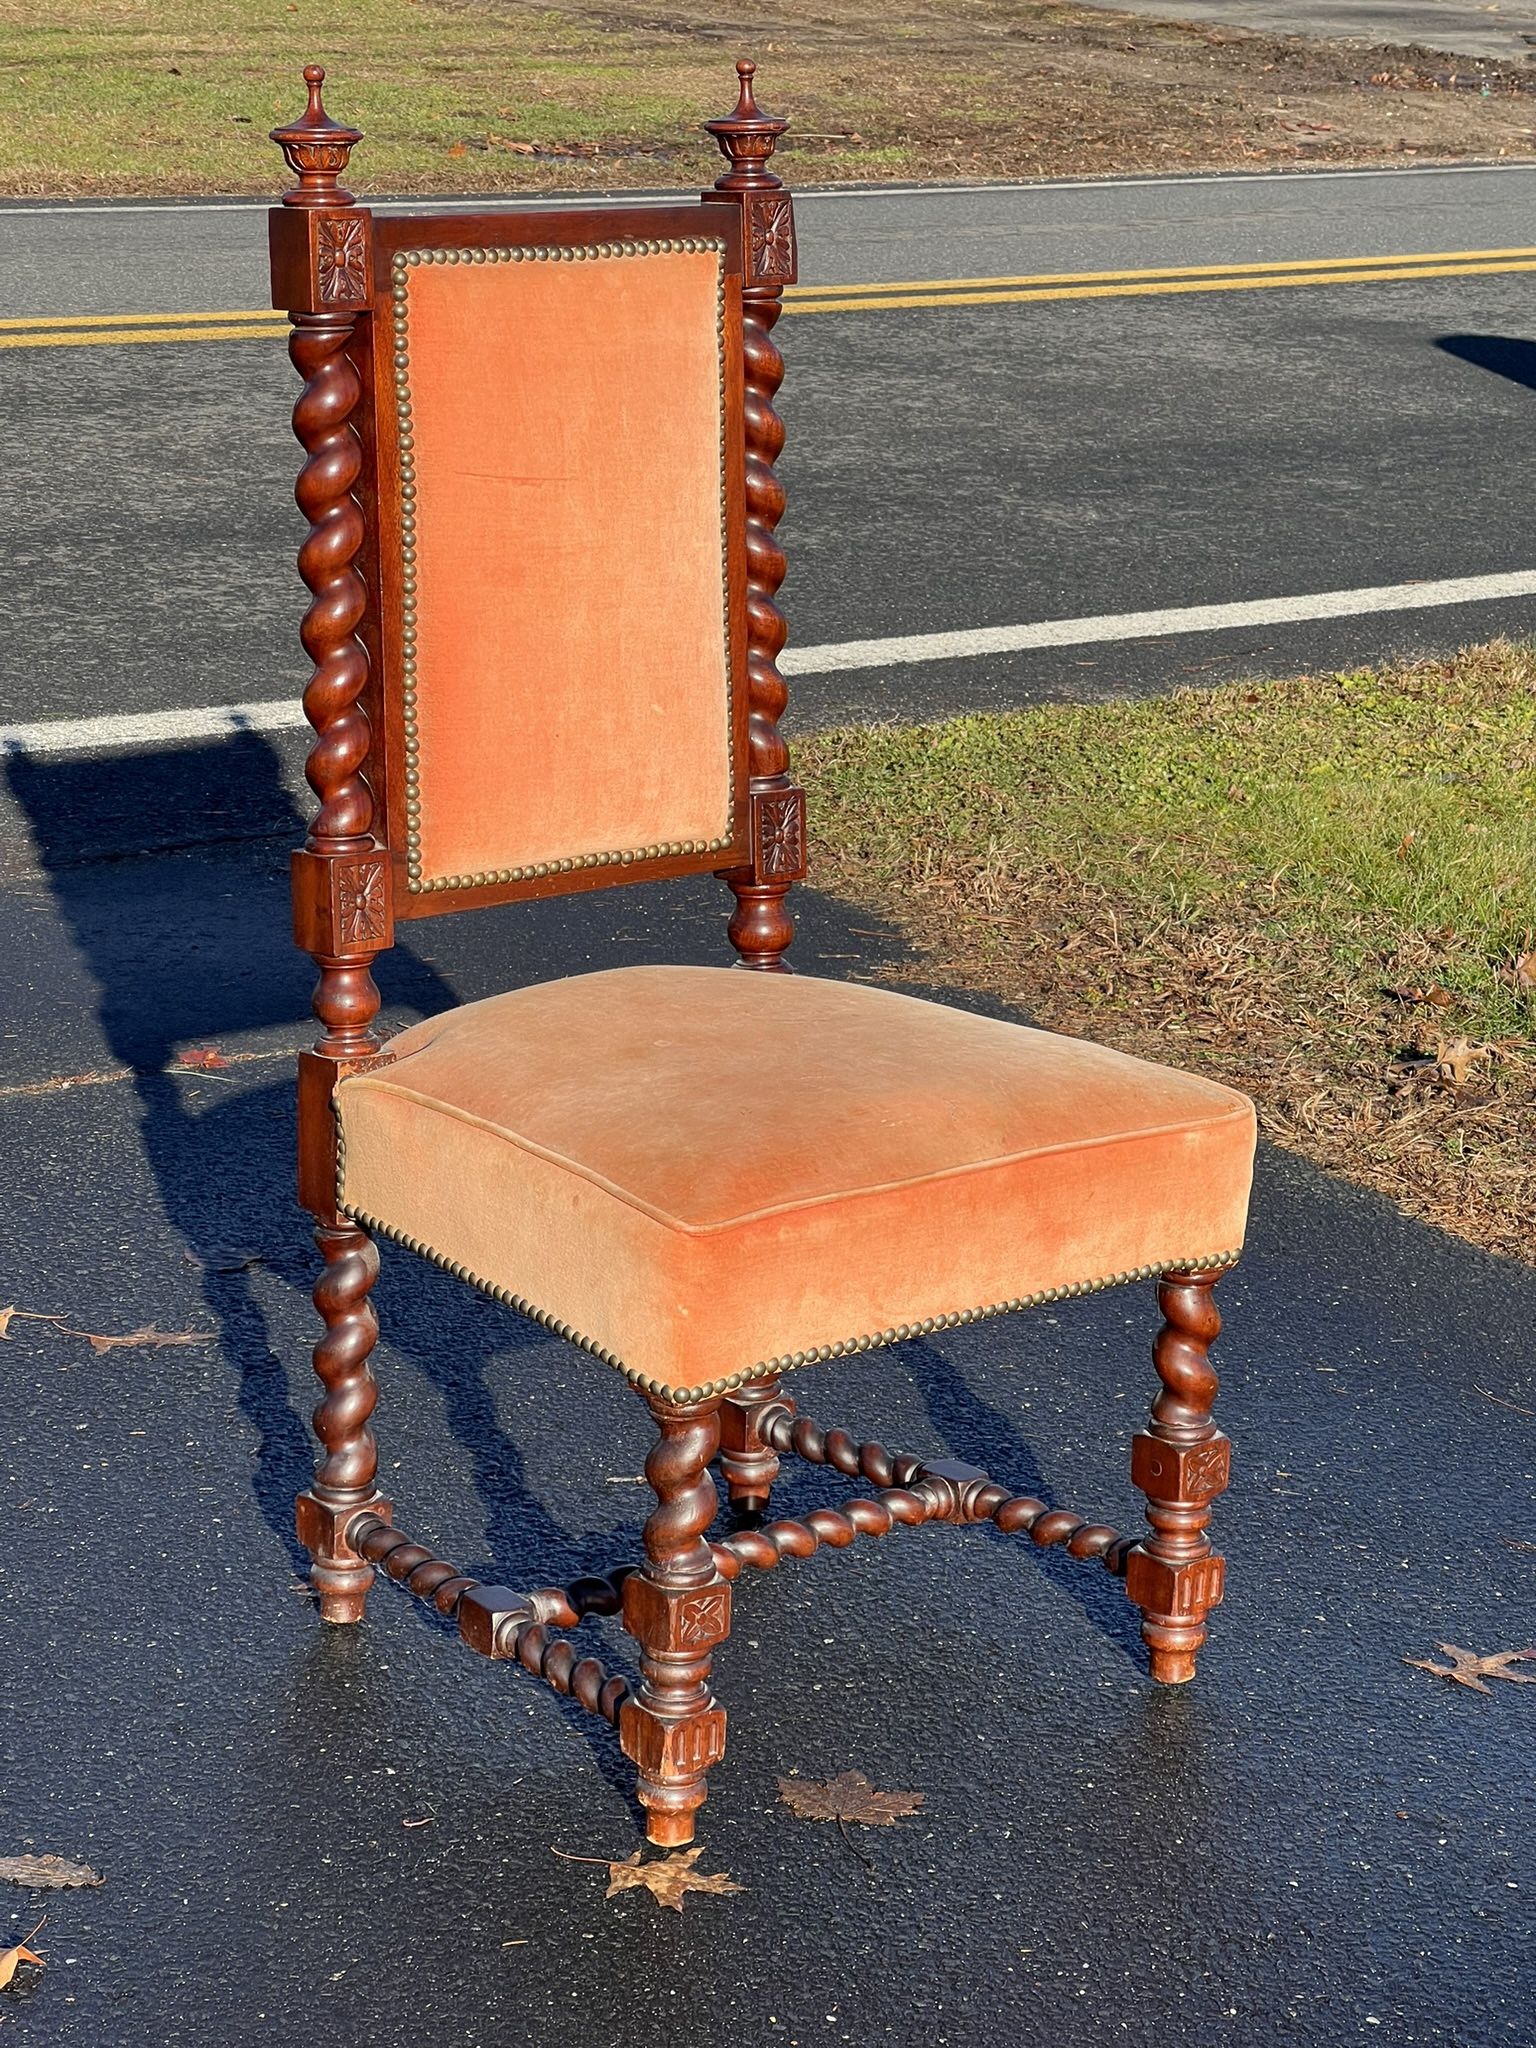 Antique Renaissance Revival Mahogany Barley Twist Parlor Chair c. 1850